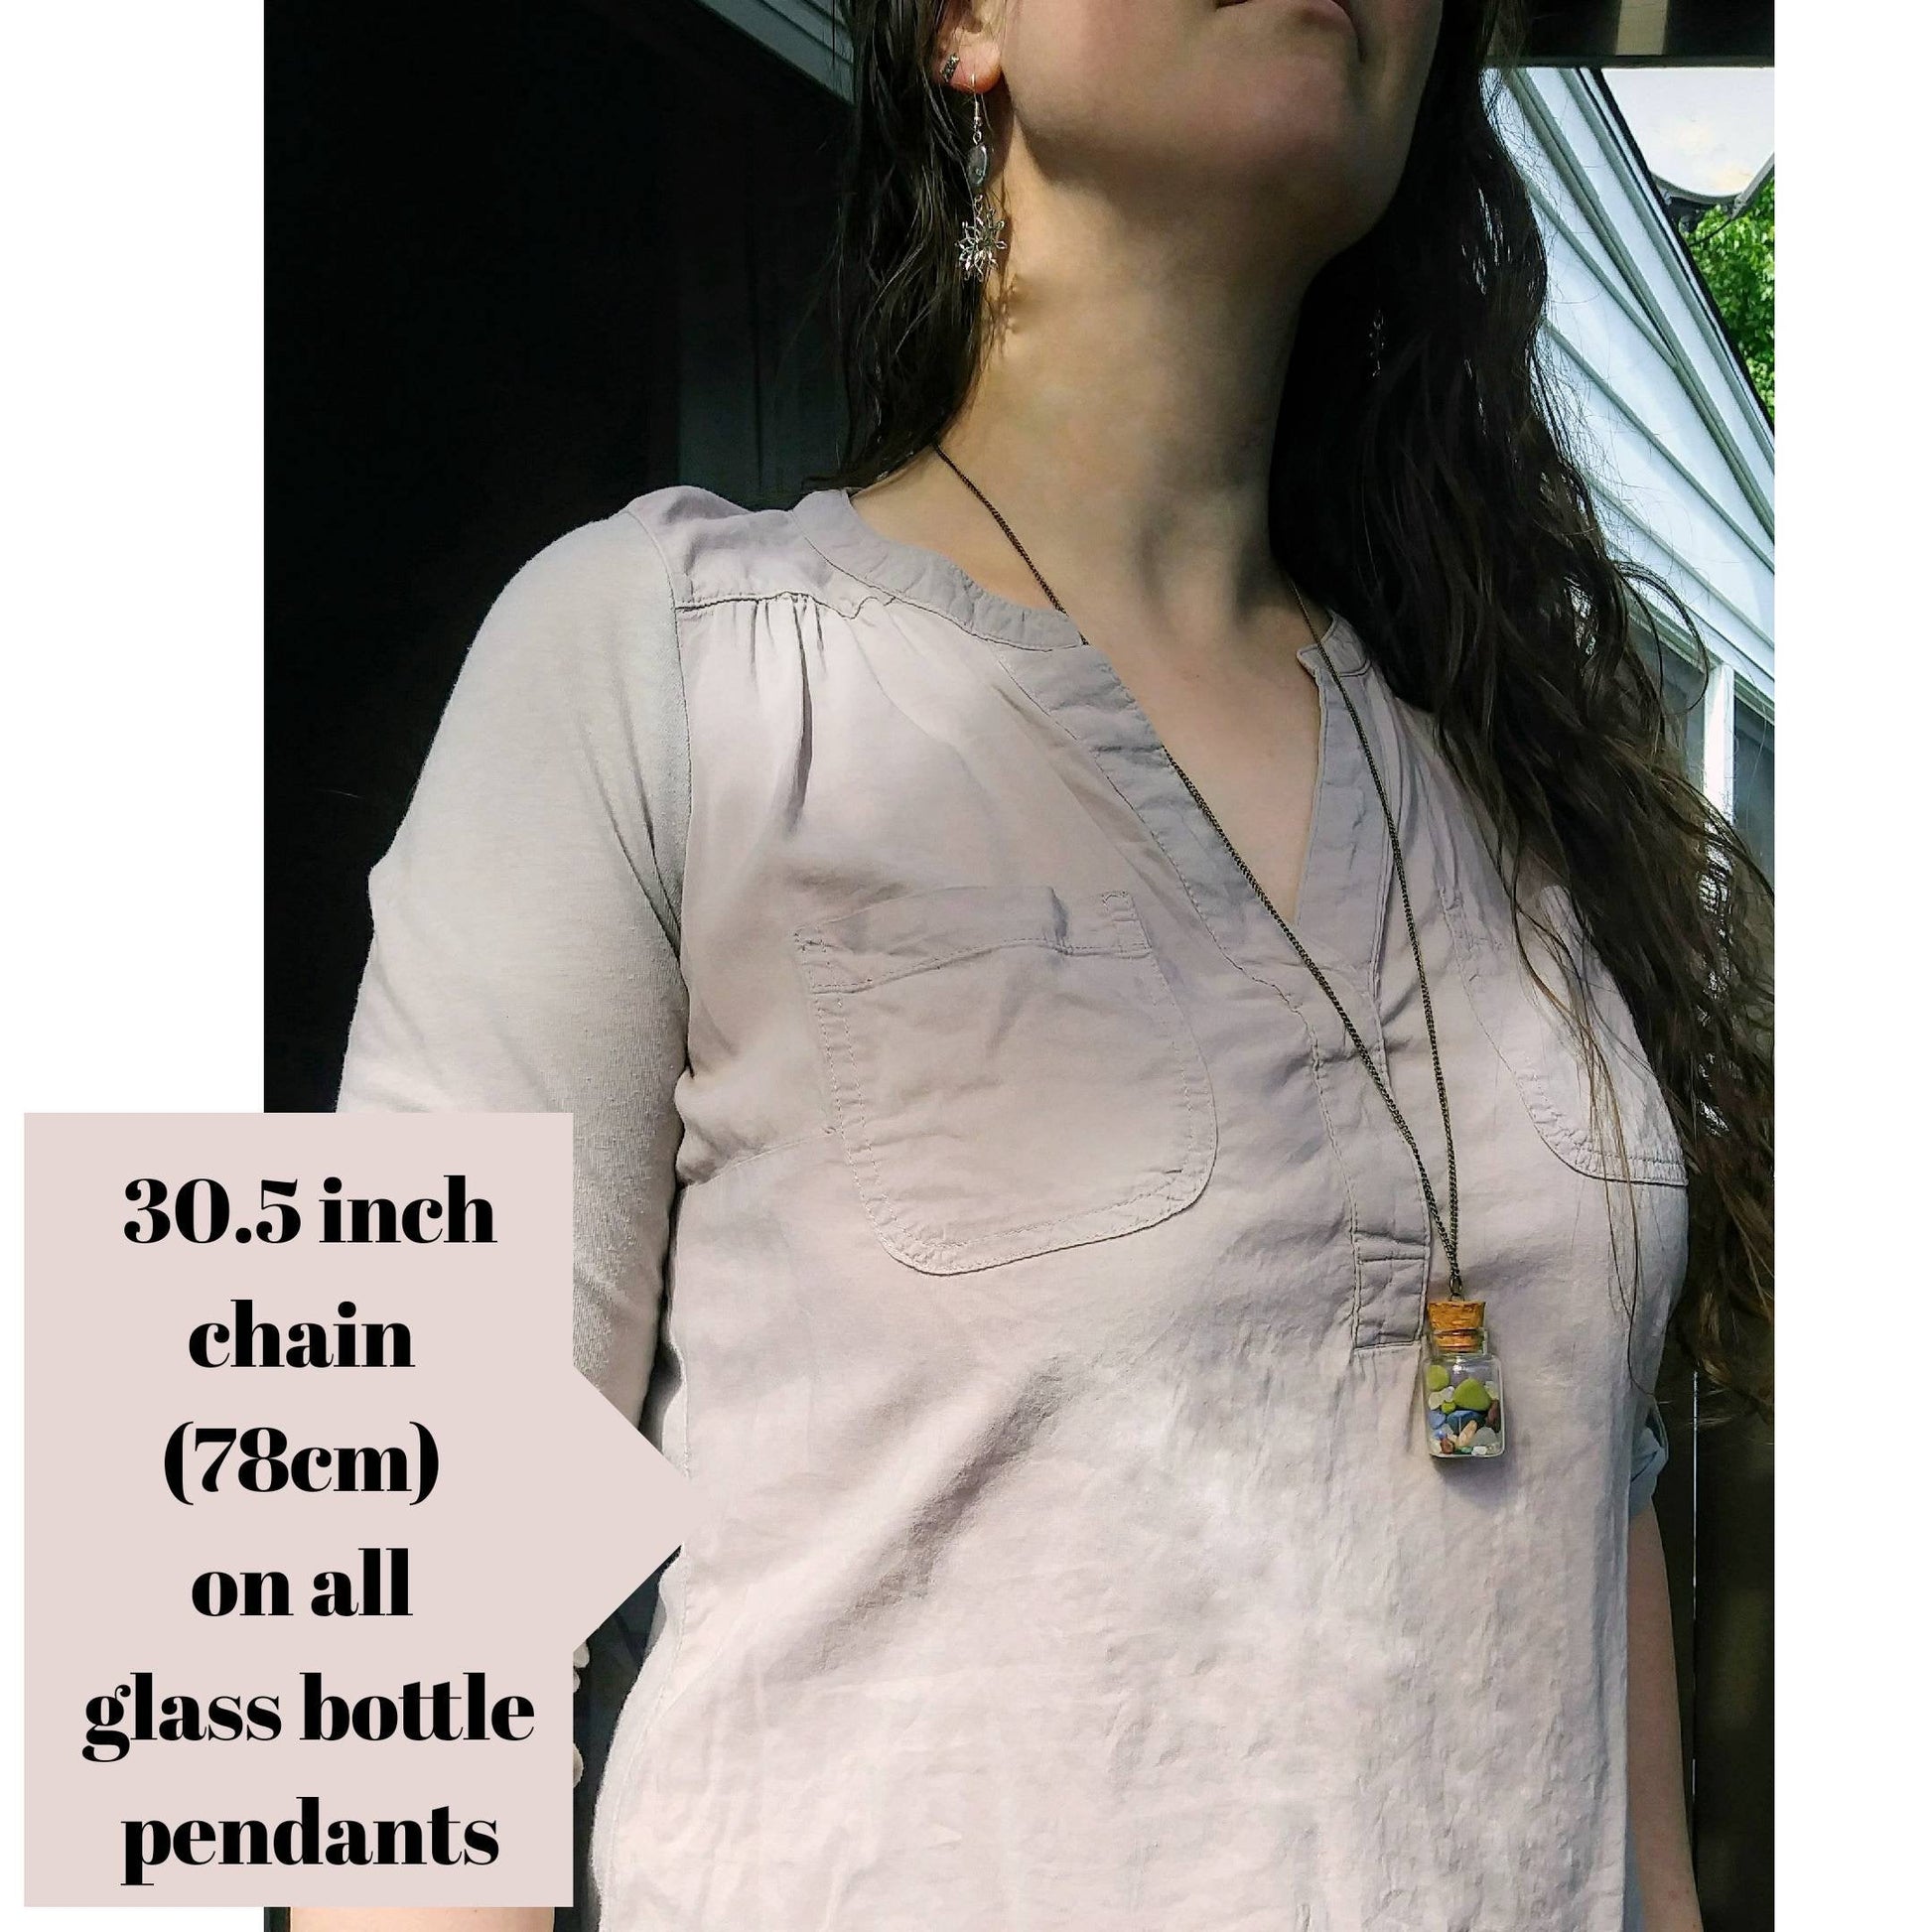 30.5 inch chain on all glass bottle pendants